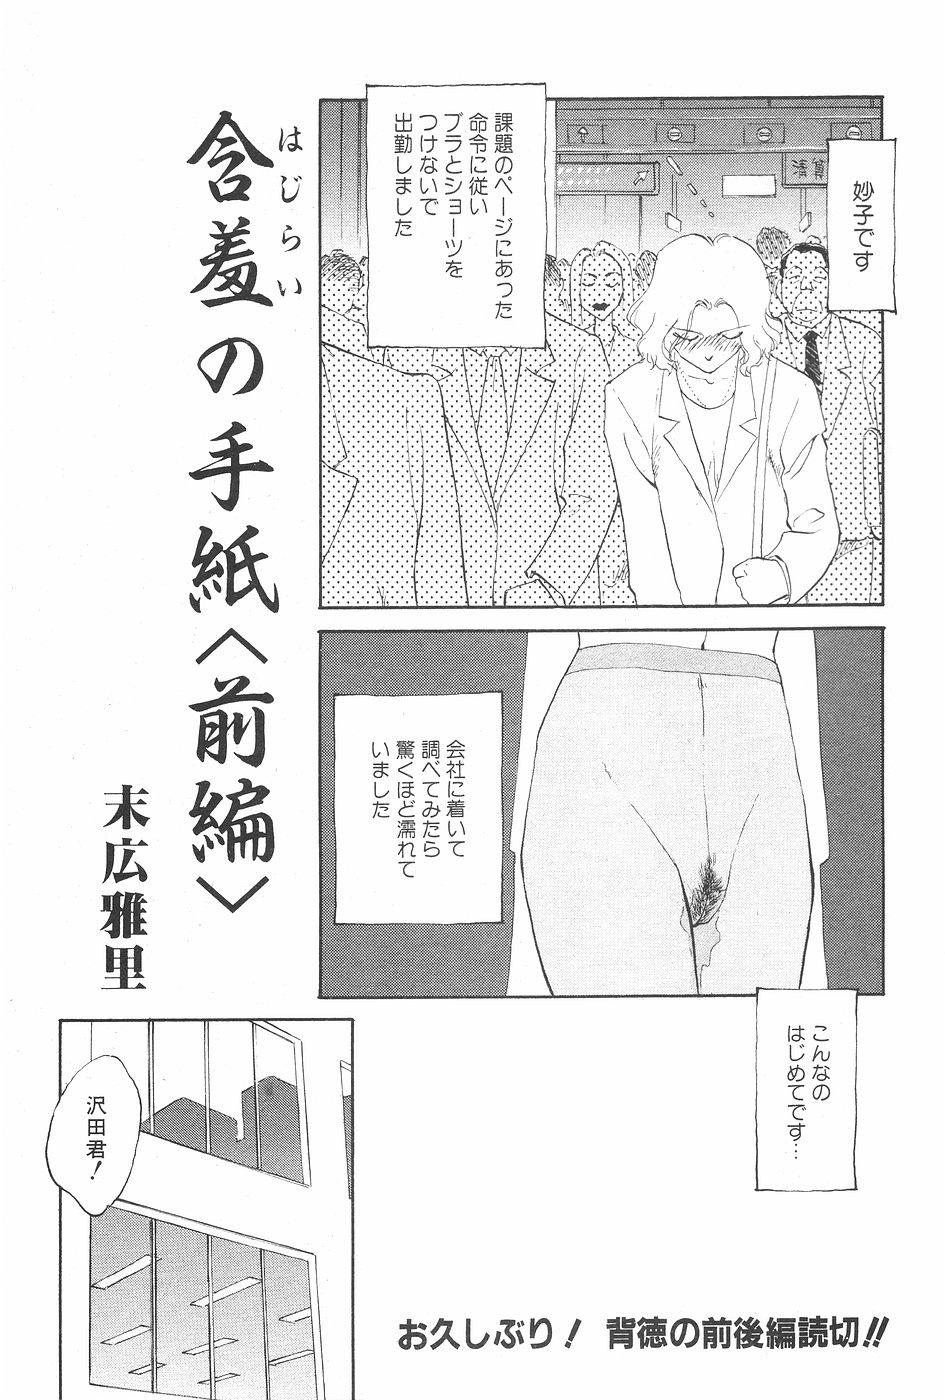 Manga Hotmilk 1997-07 18